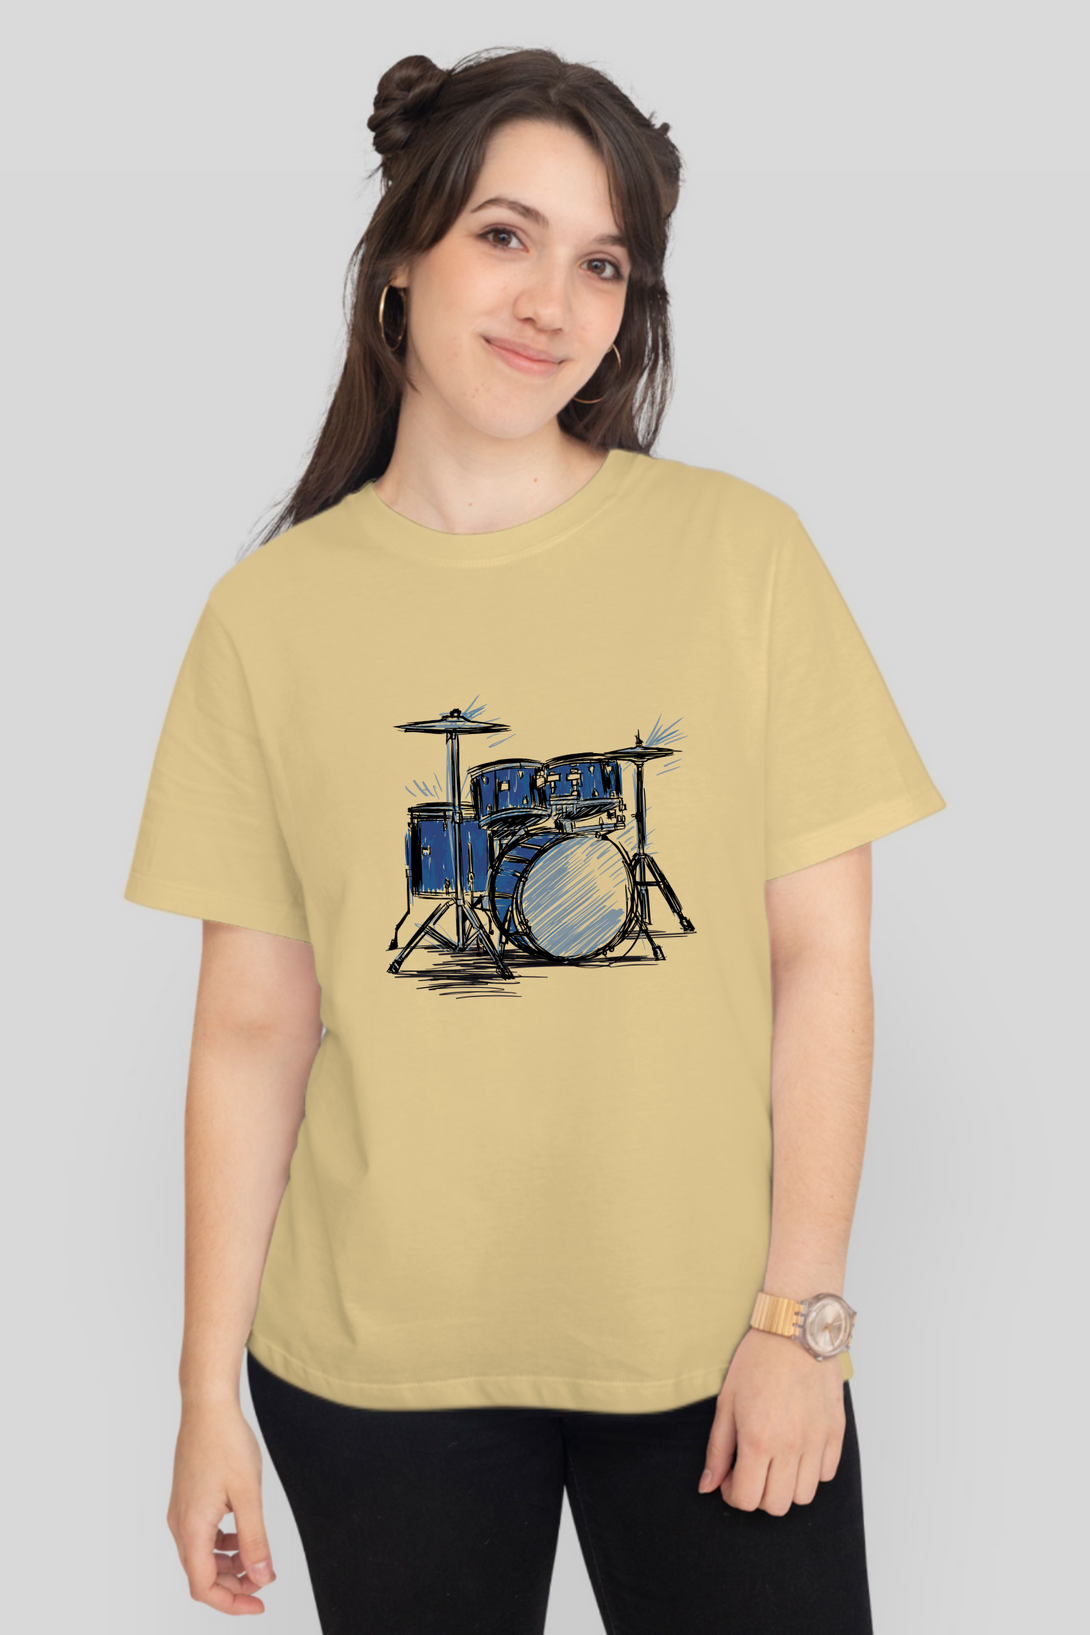 Rhythmic Beats Printed T-Shirt For Women - WowWaves - 8